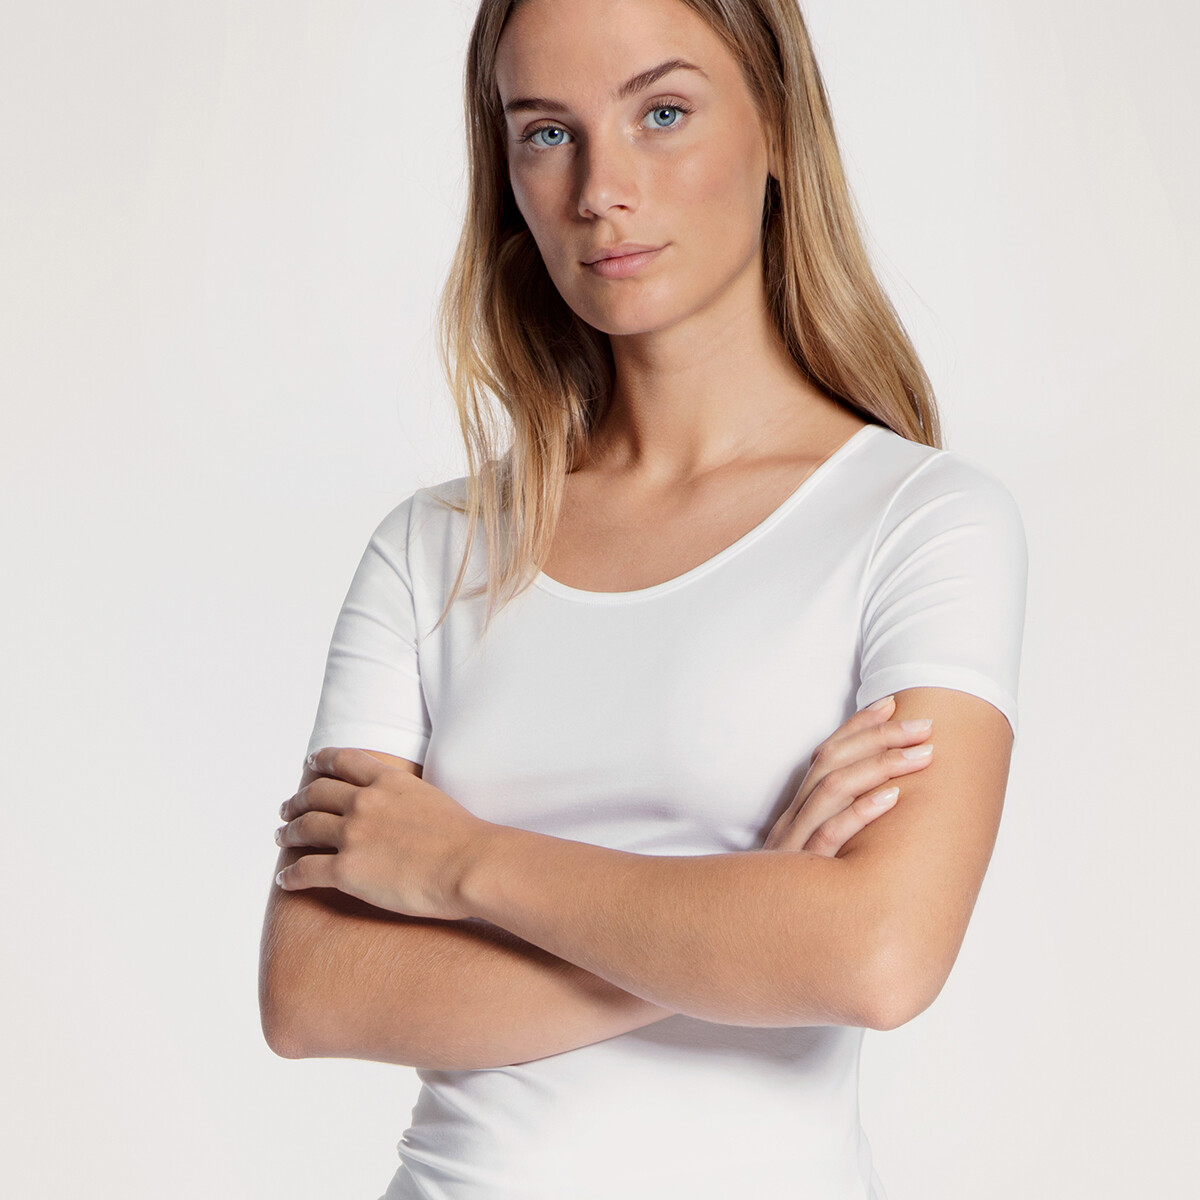 Se Calida T-shirt, Farve: Hvid, Størrelse: XS, Dame hos Netlingeri.dk